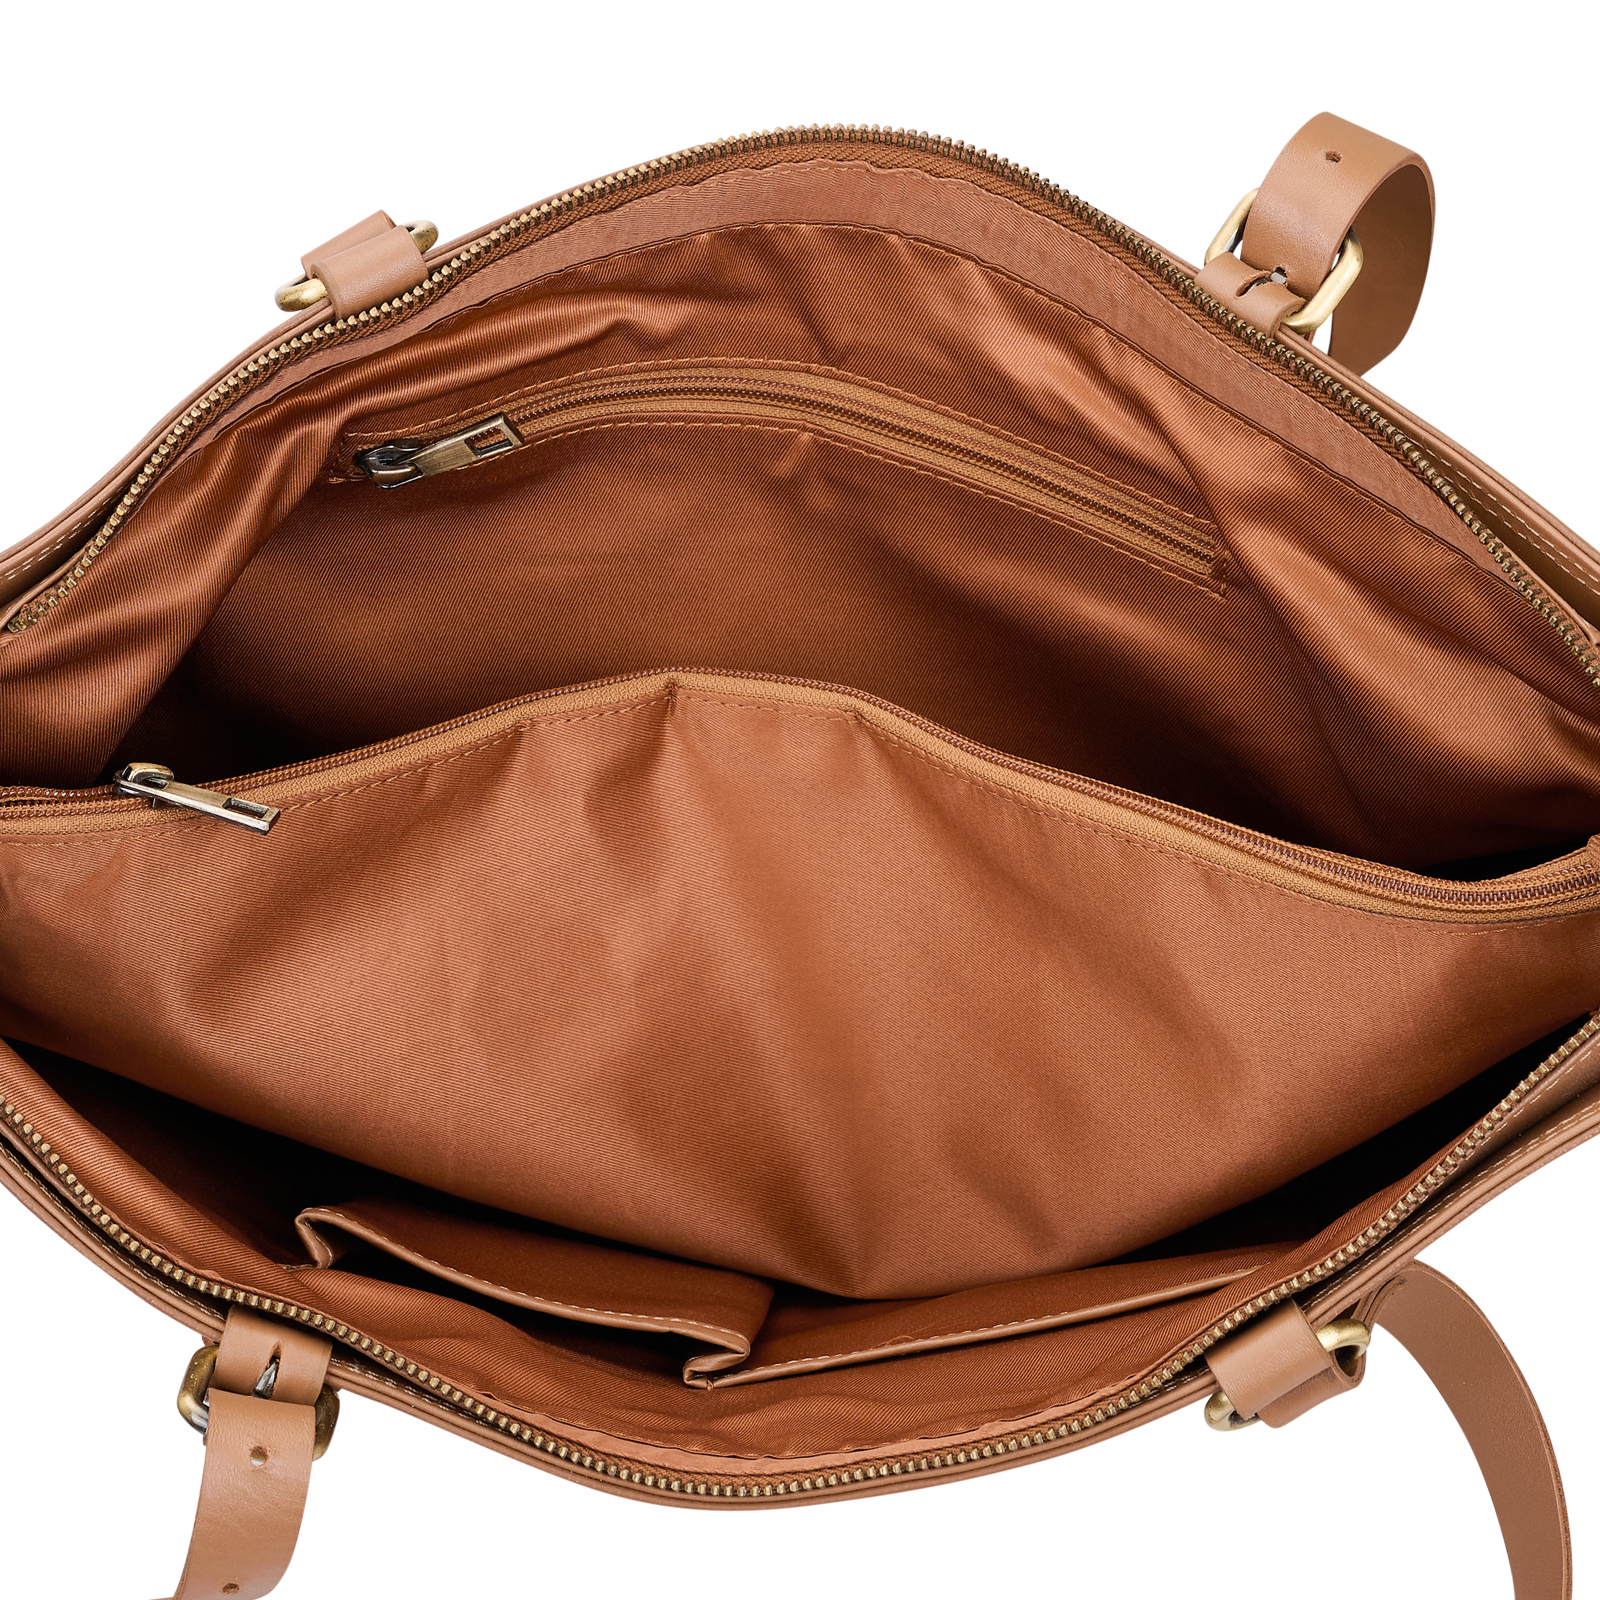 10 Work Bag Essentials To Set Yourself Up For Success | Béis Travel